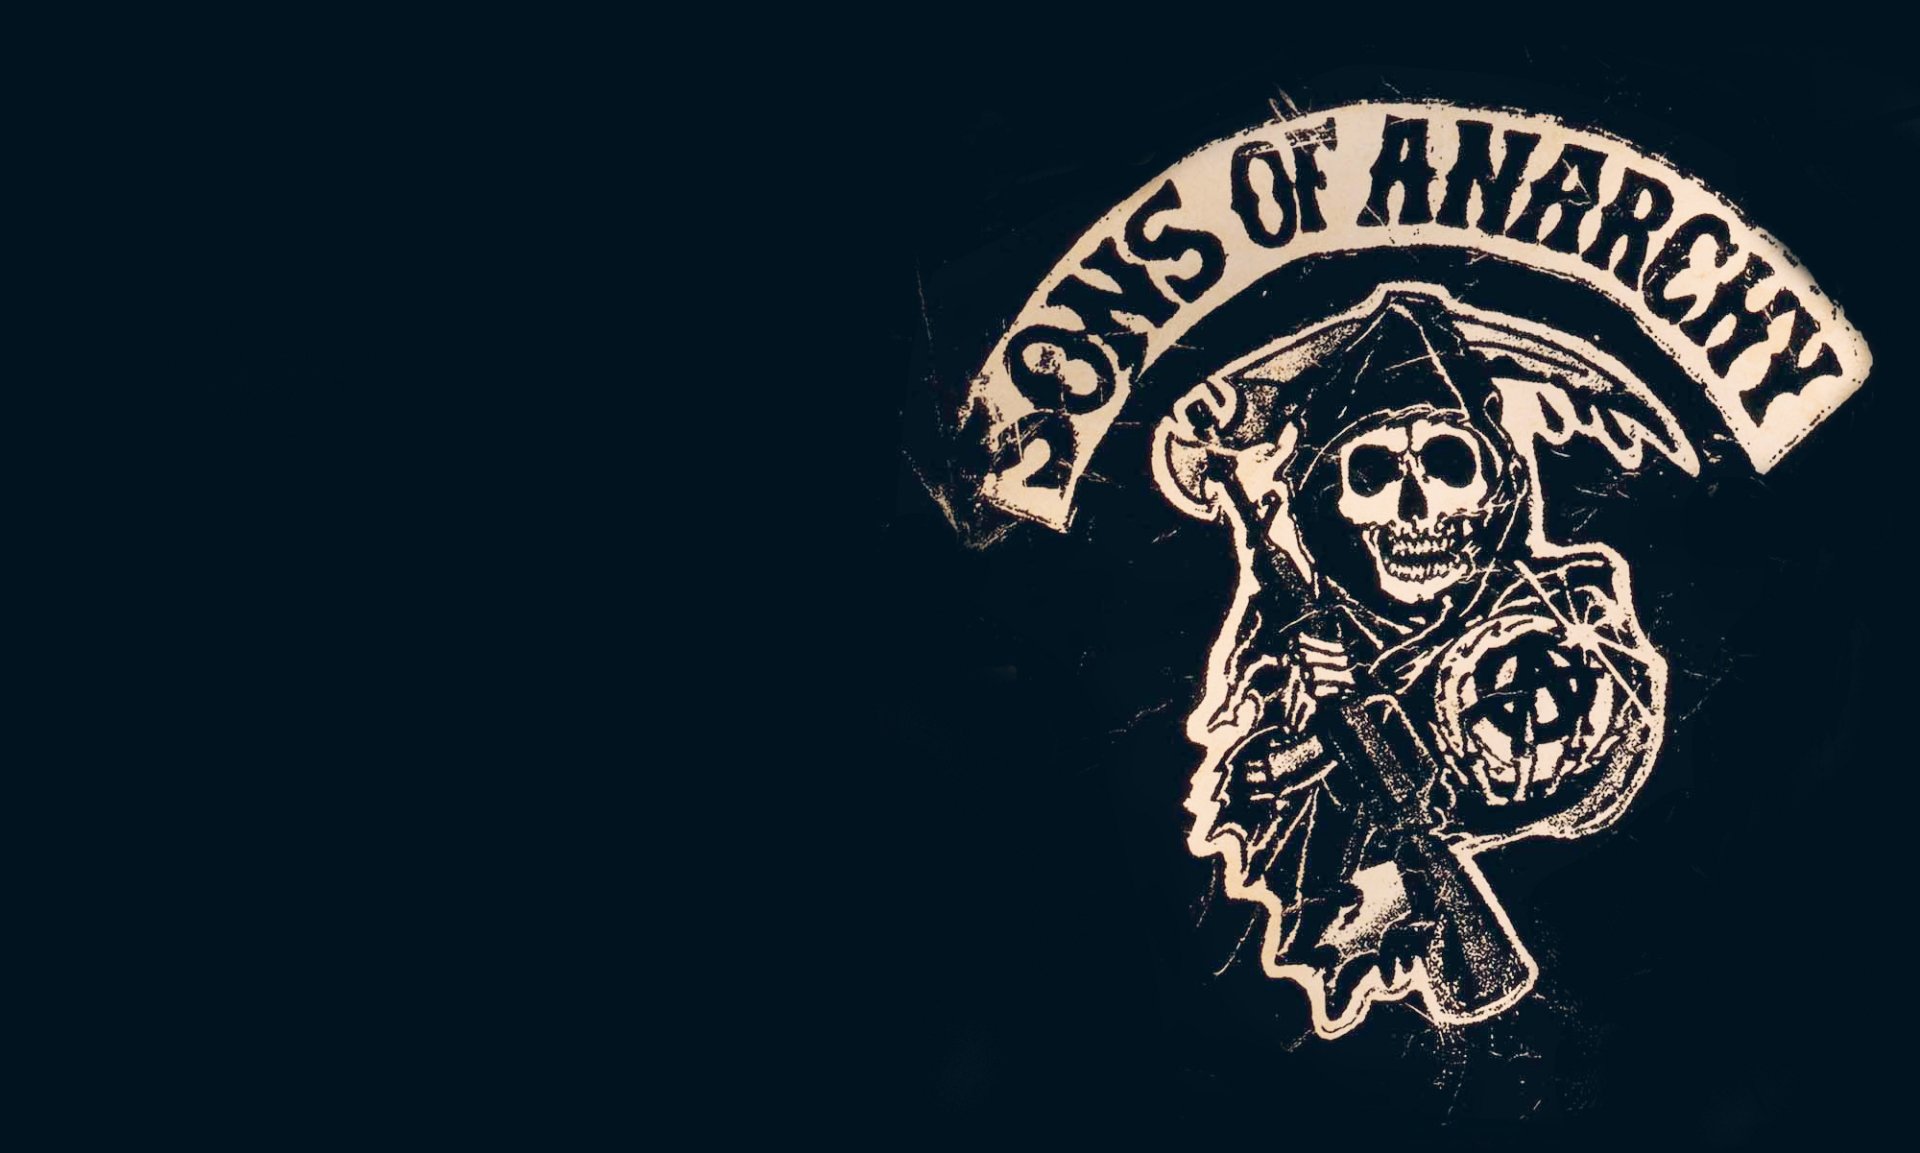 Sons Of Anarchy Full HD Fond d'écran and Arrière-Plan | 2000x1201 | ID